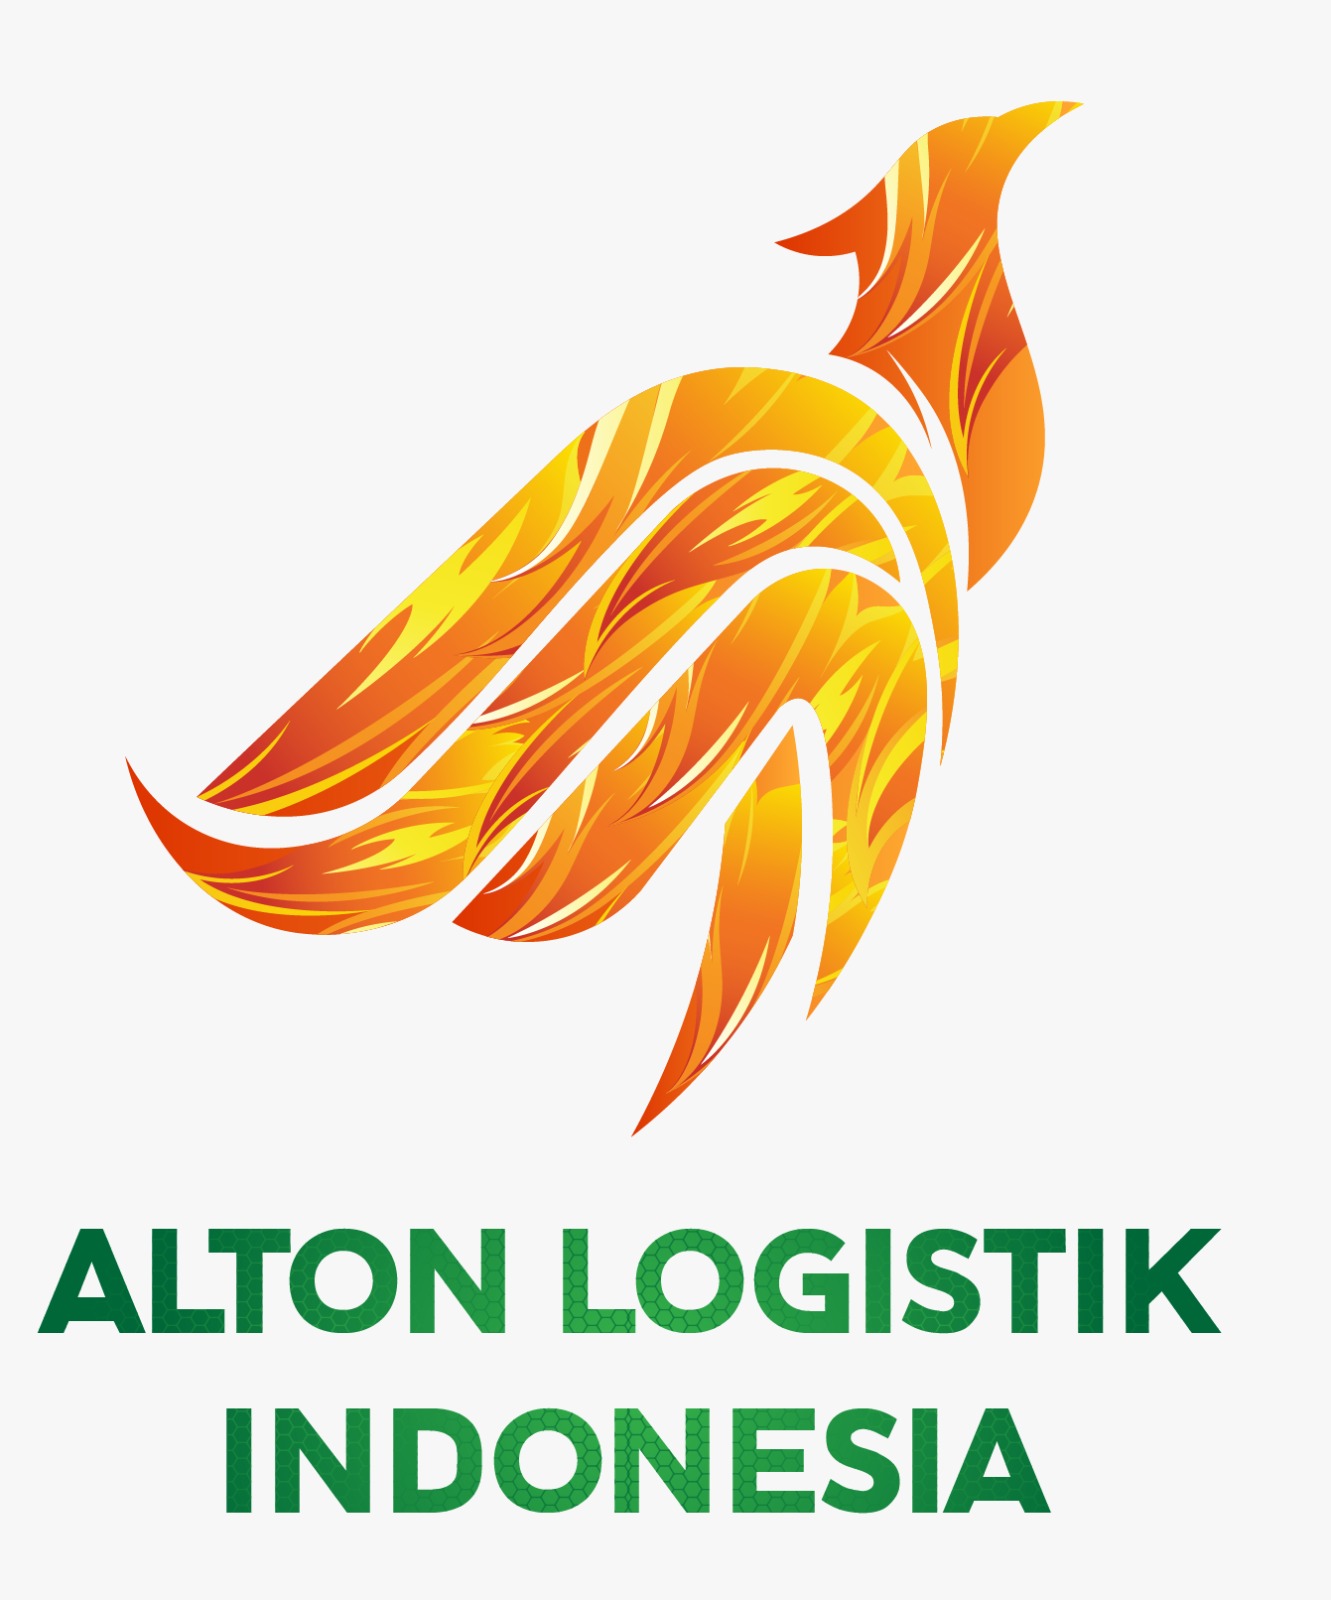 Alton Logistik Indonesia Bantu Pendistribusian LeBening ke Seluruh Jawa